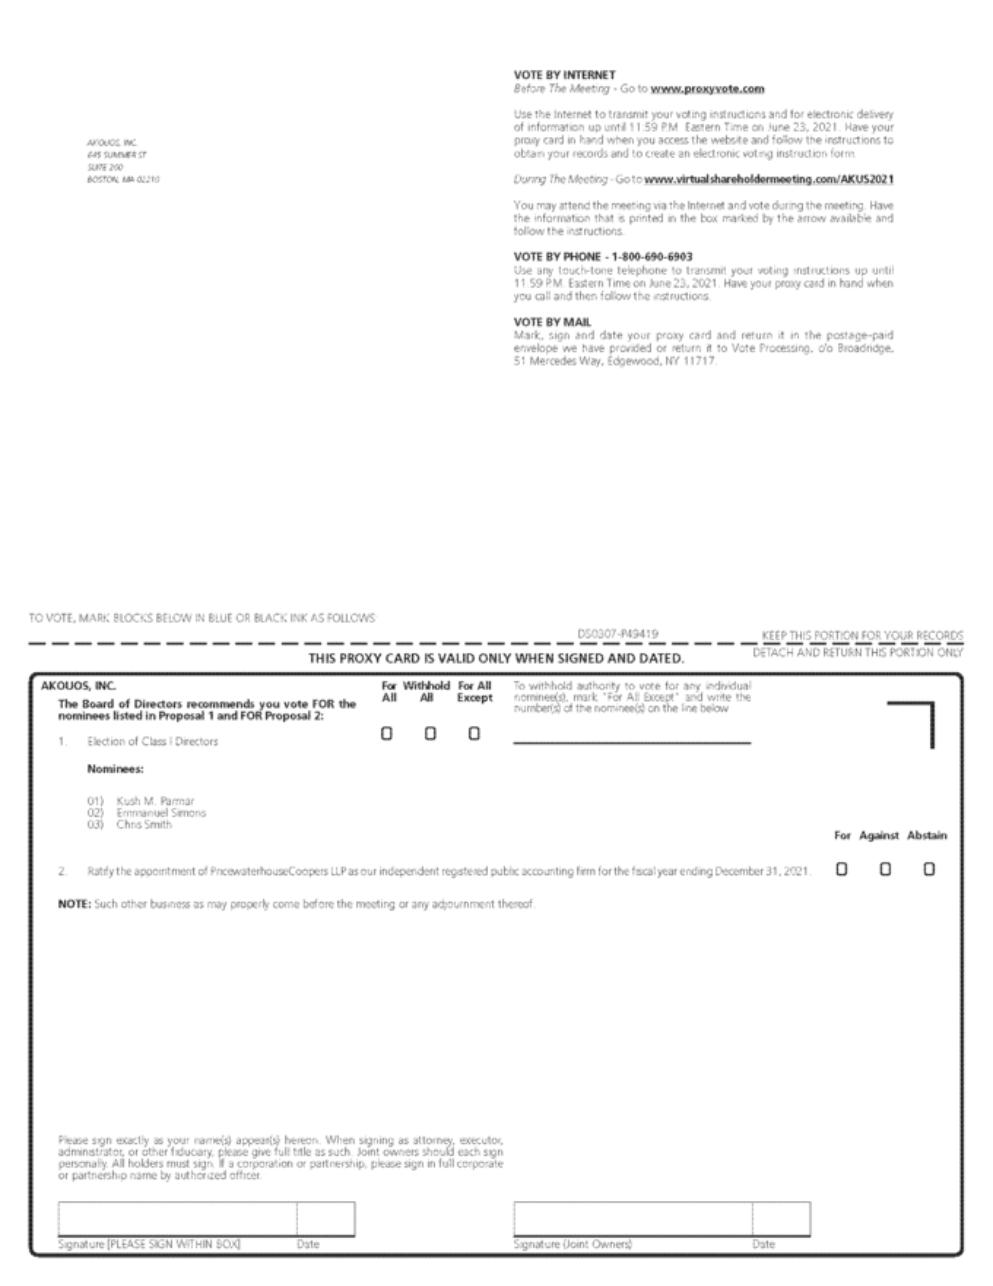 New Microsoft Word Document_proxy card_final_page_1.gif